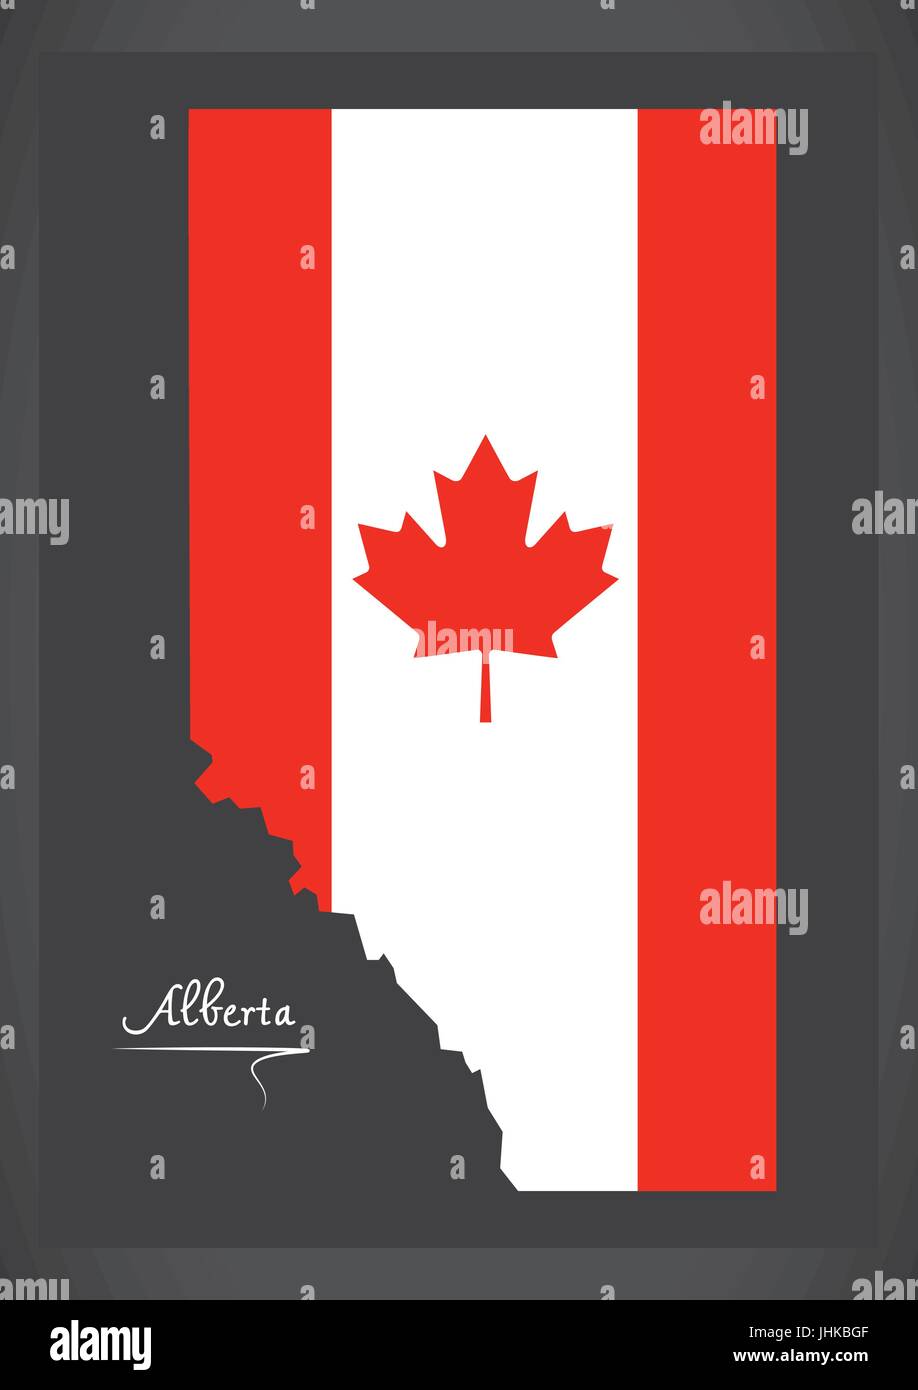 Alberta Canada map avec le Canadien national flag illustration Illustration de Vecteur